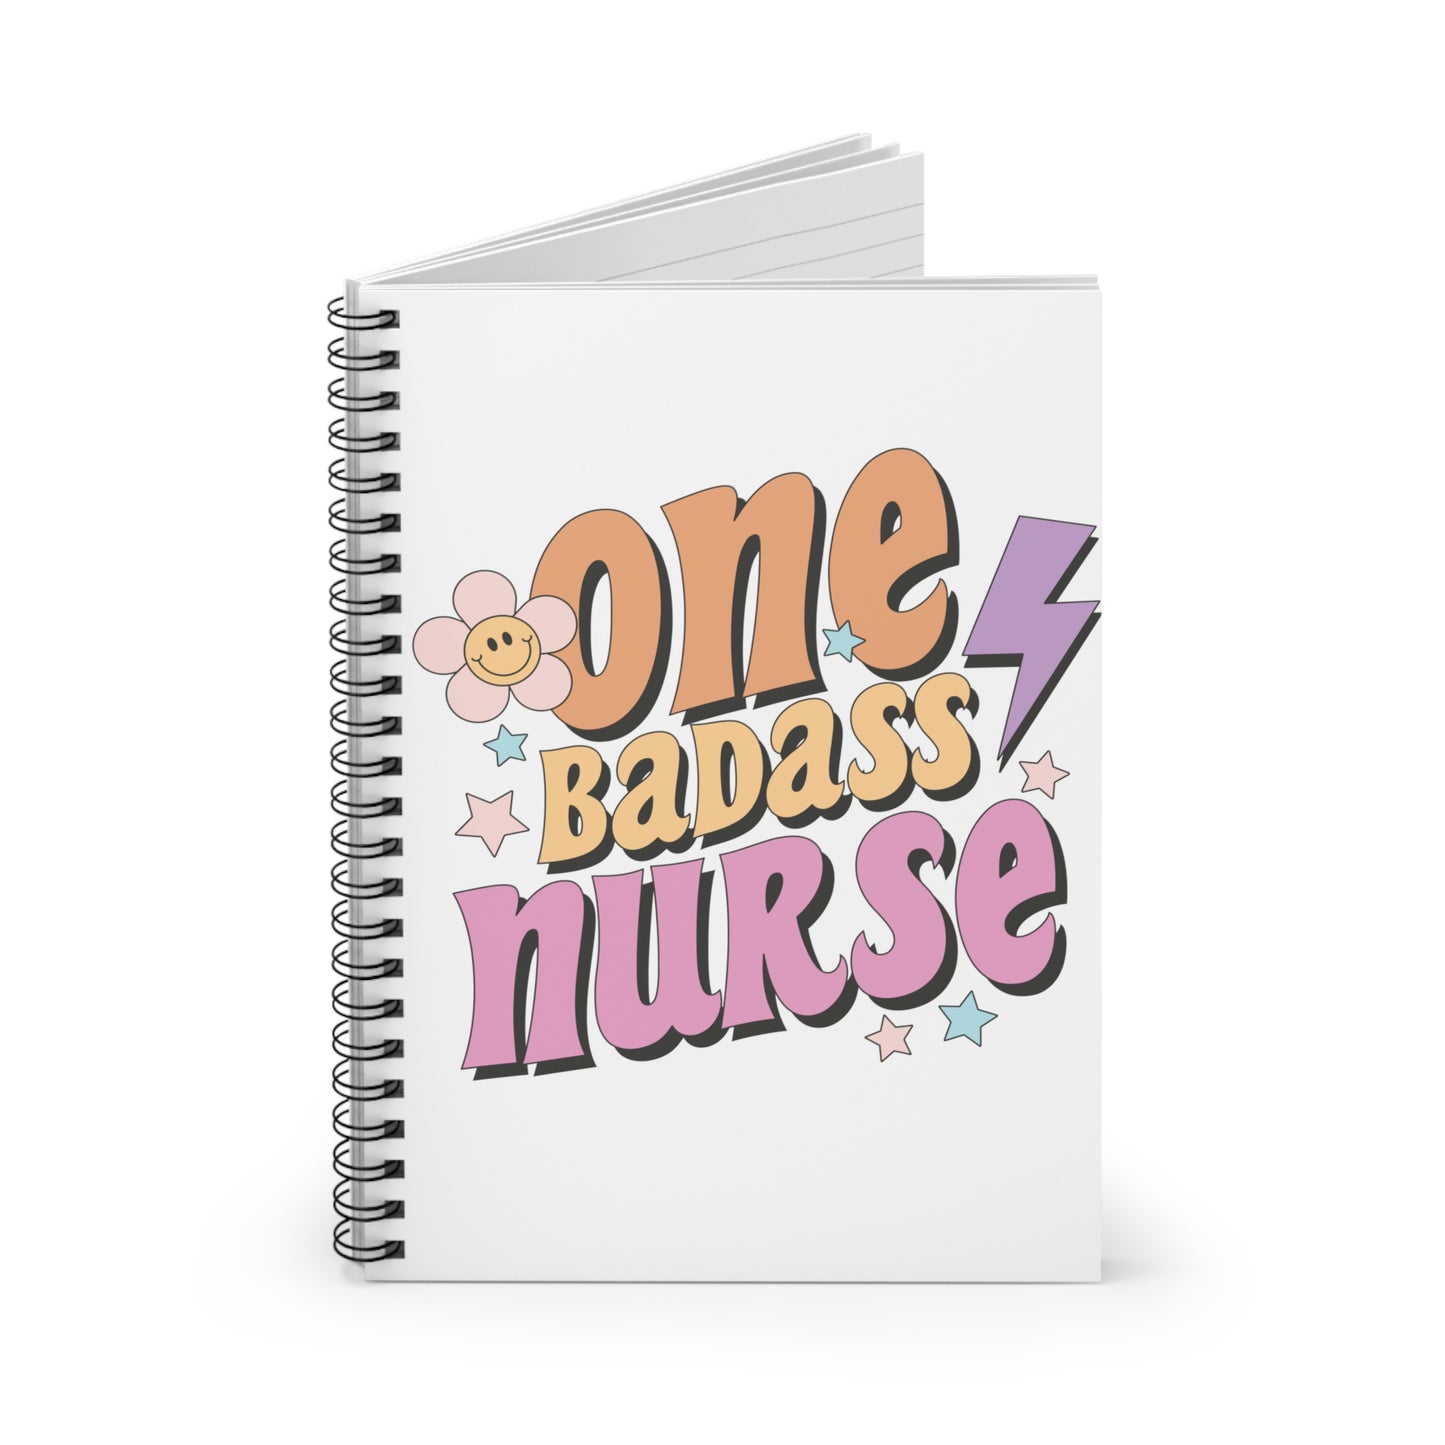 Badass Nurse: Spiral Notebook - Log Books - Journals - Diaries - and More Custom Printed by TheGlassyLass